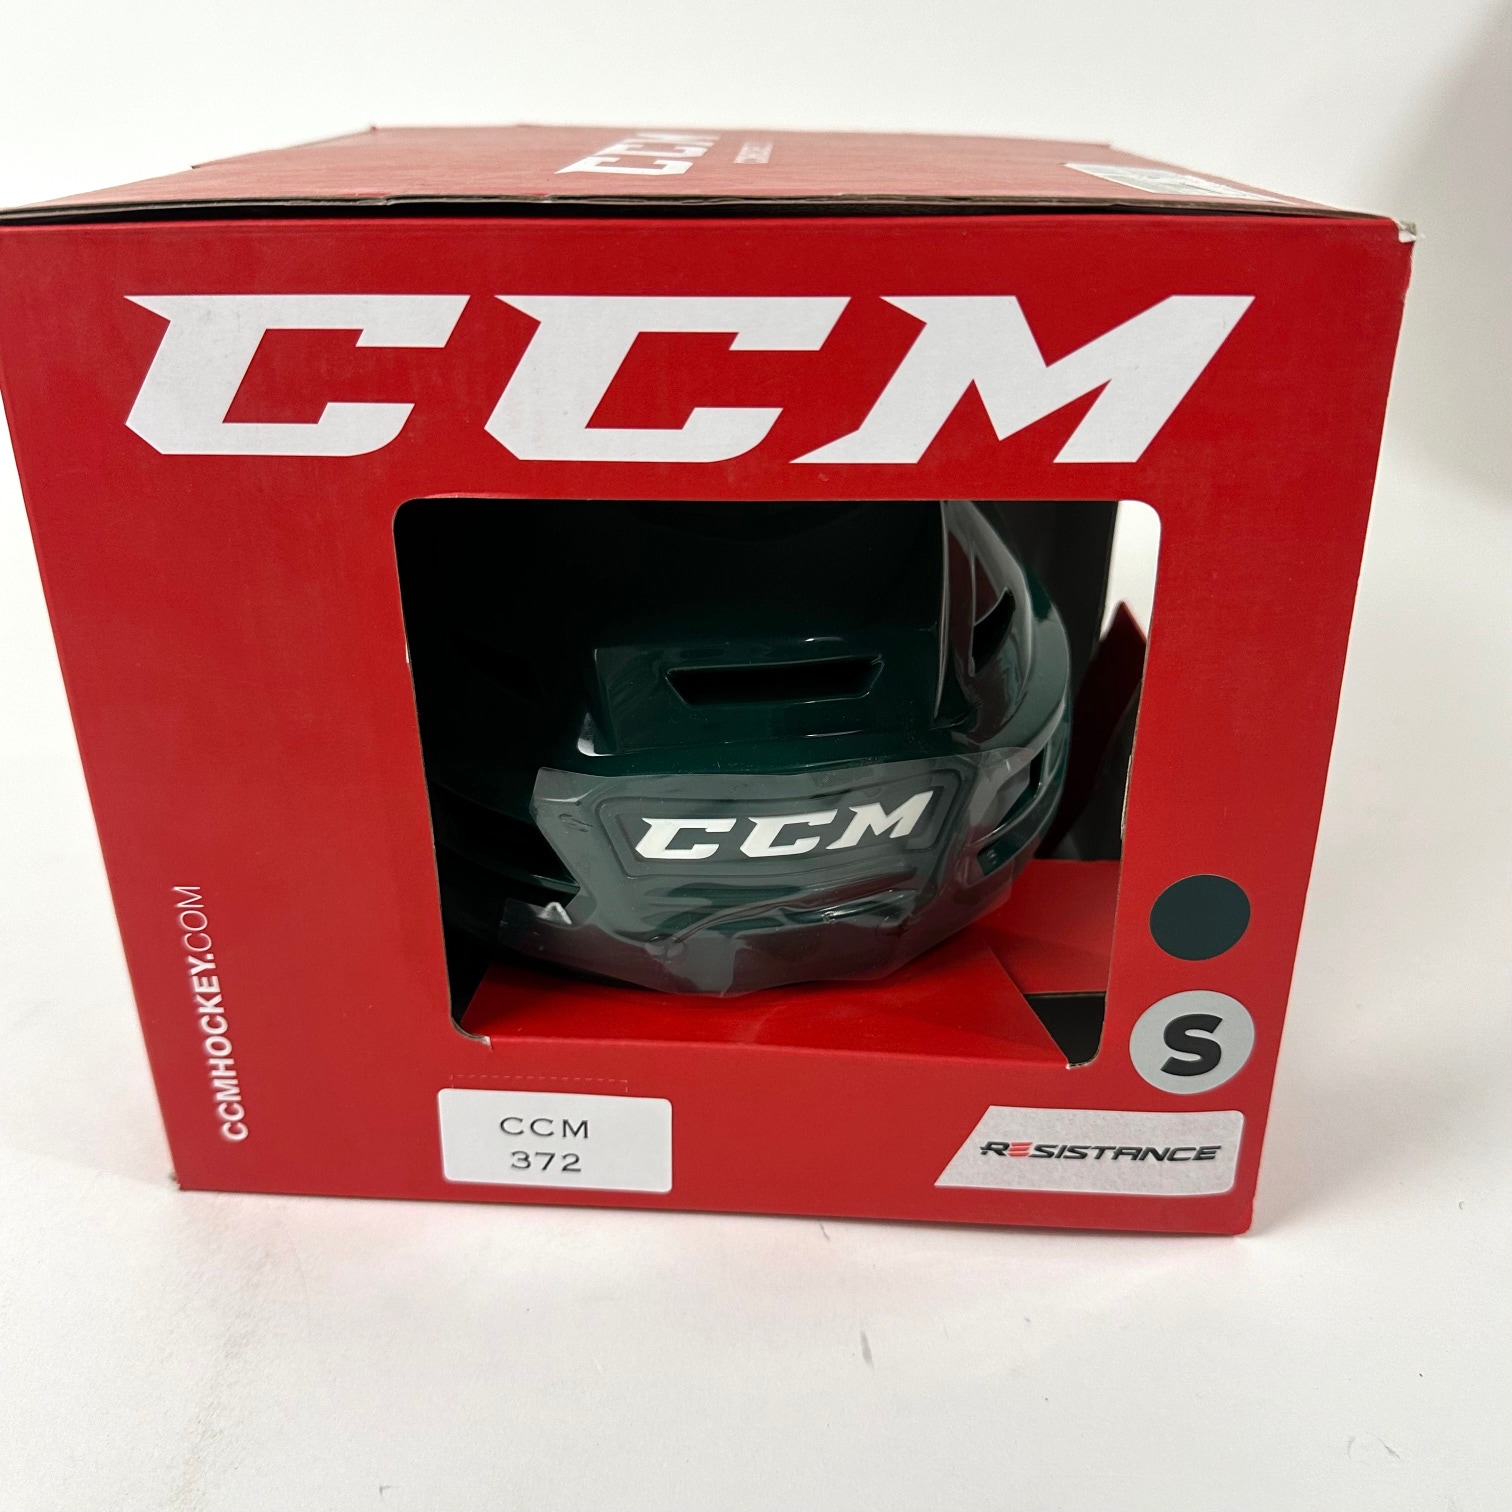 Brand New CCM Resistance Helmet in Box - Dark Green - Small #CCM372